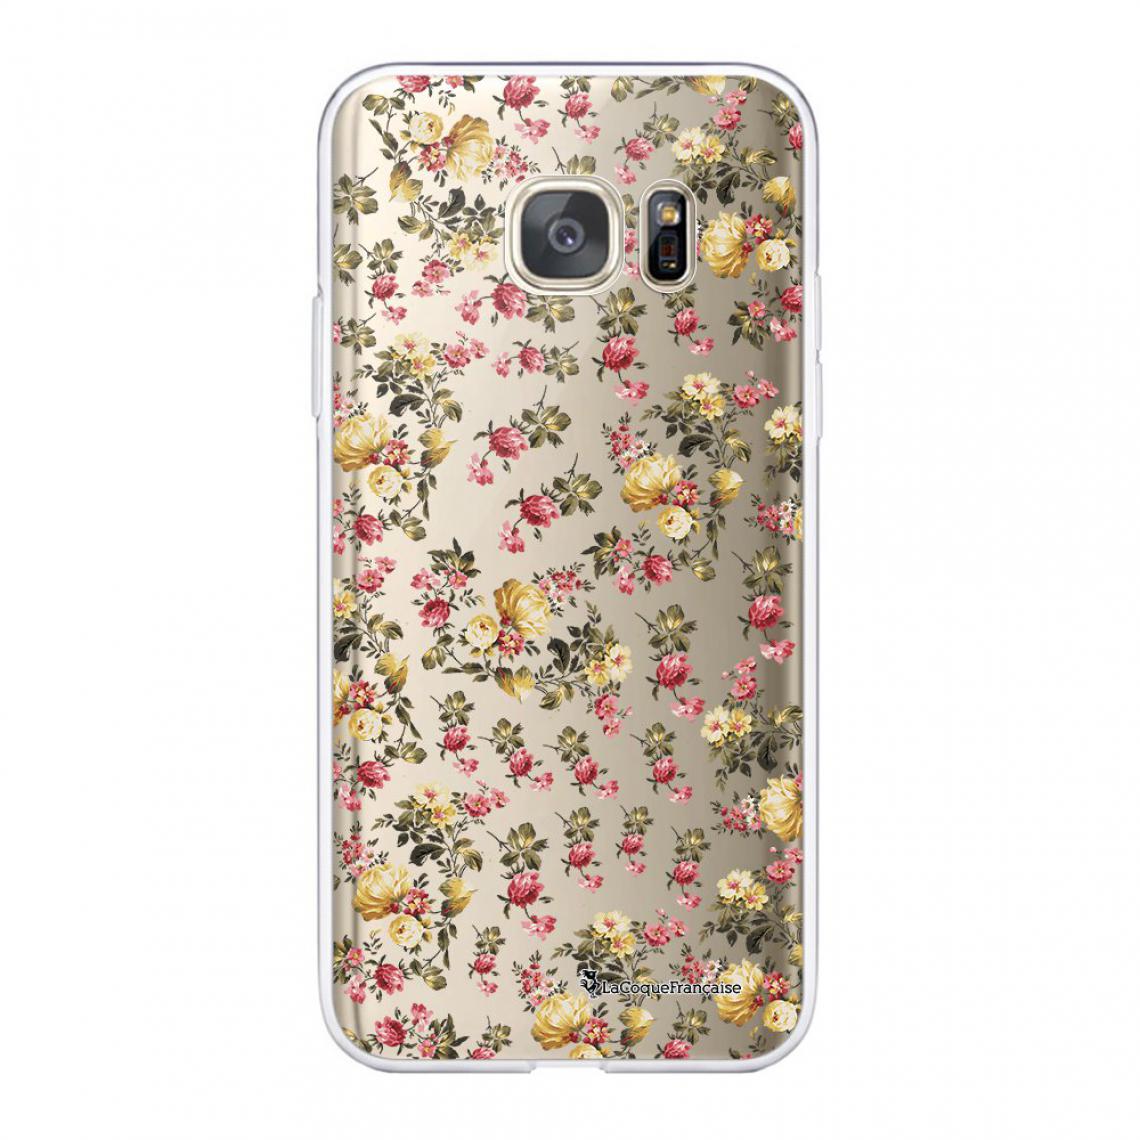 La Coque Francaise - Coque Samsung Galaxy S7 souple silicone transparente - Coque, étui smartphone